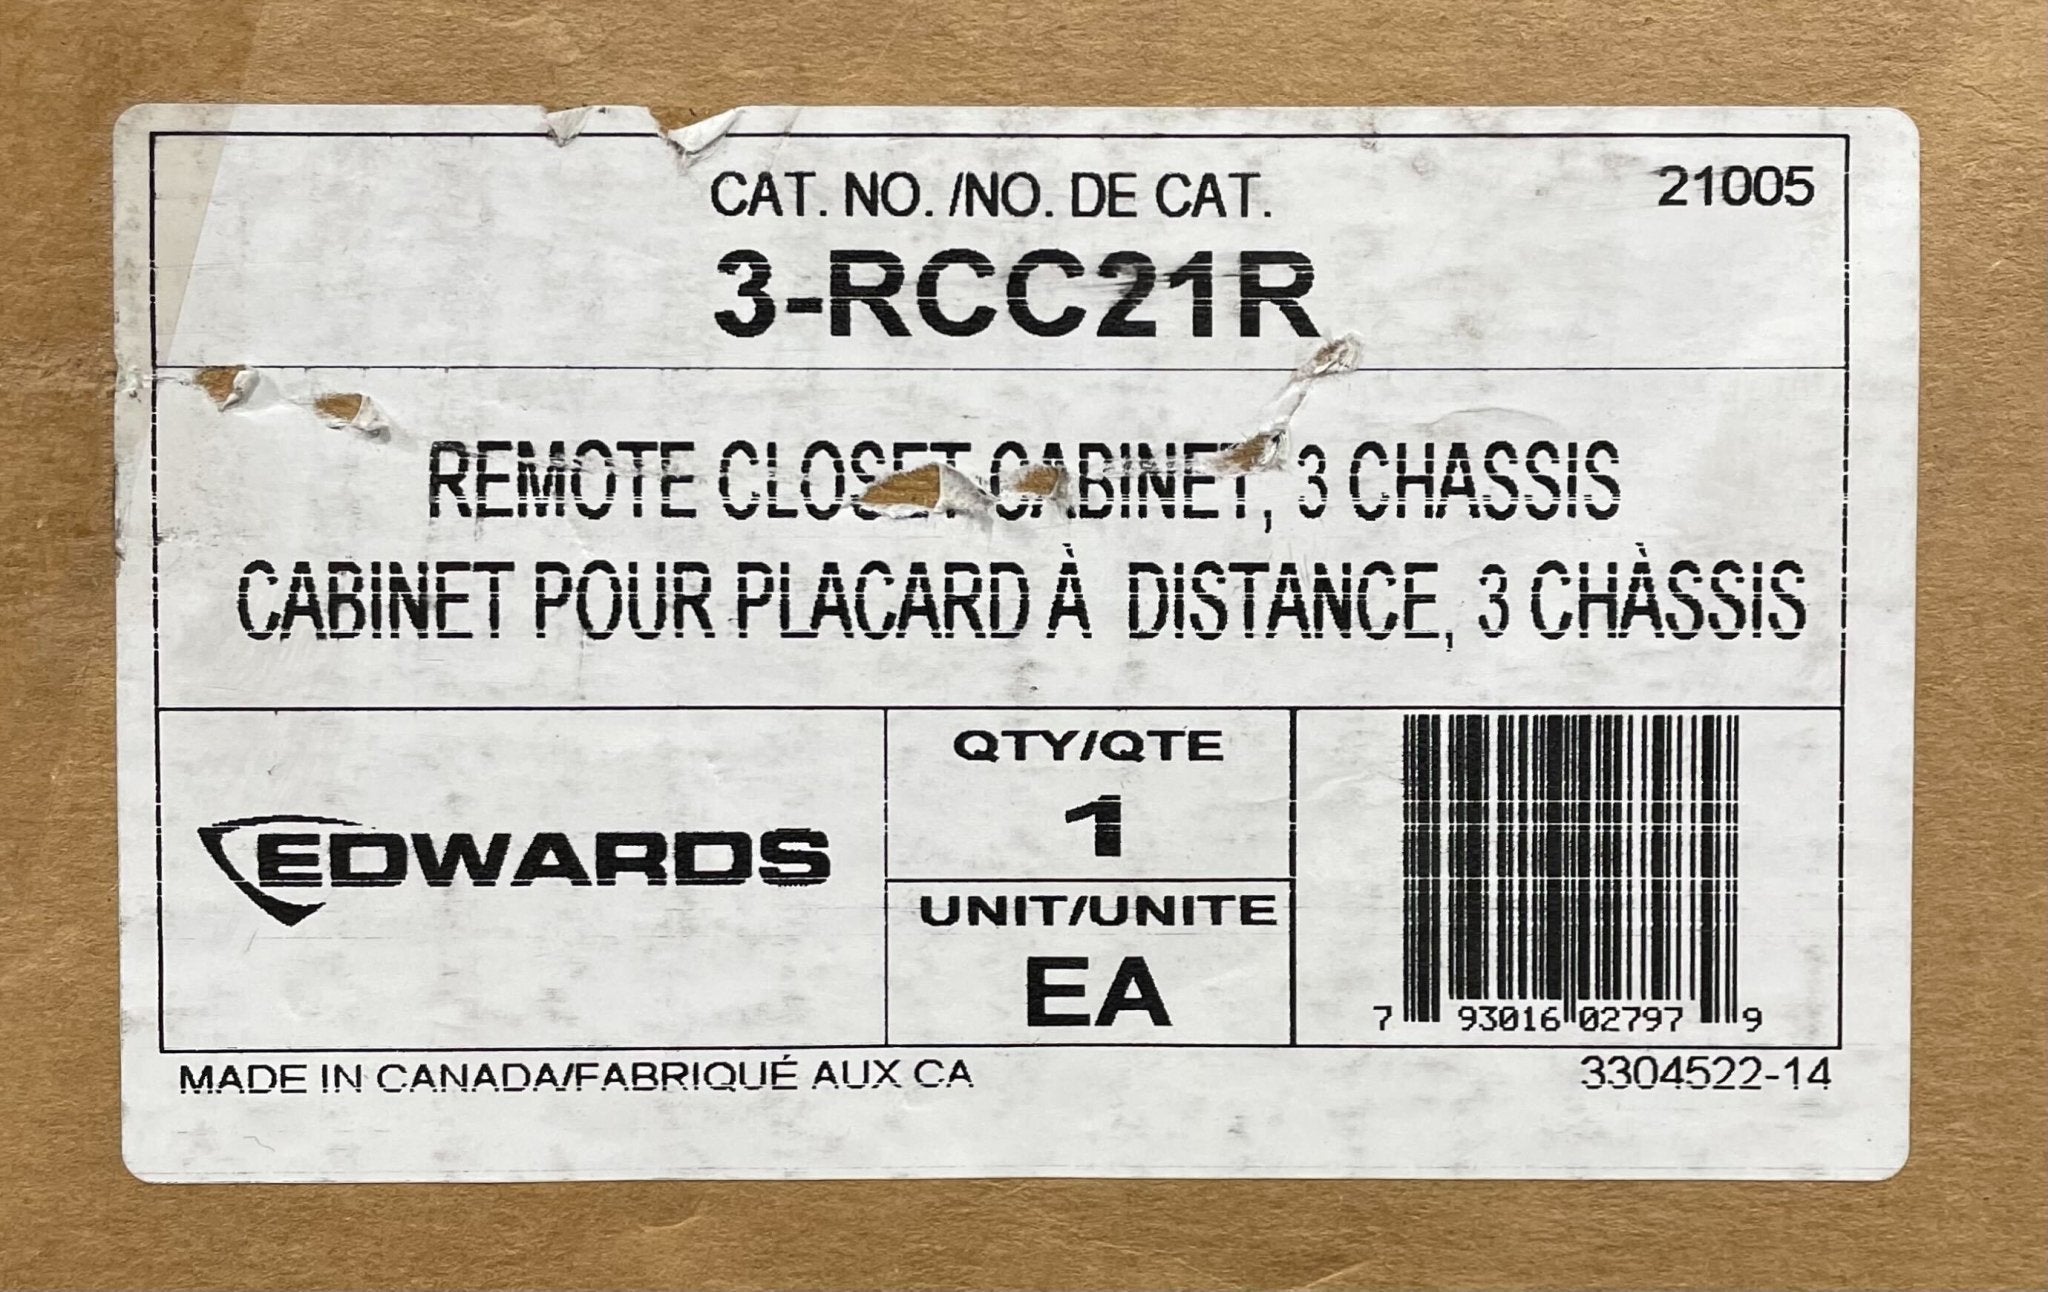 Edwards 3-RCC21R - The Fire Alarm Supplier